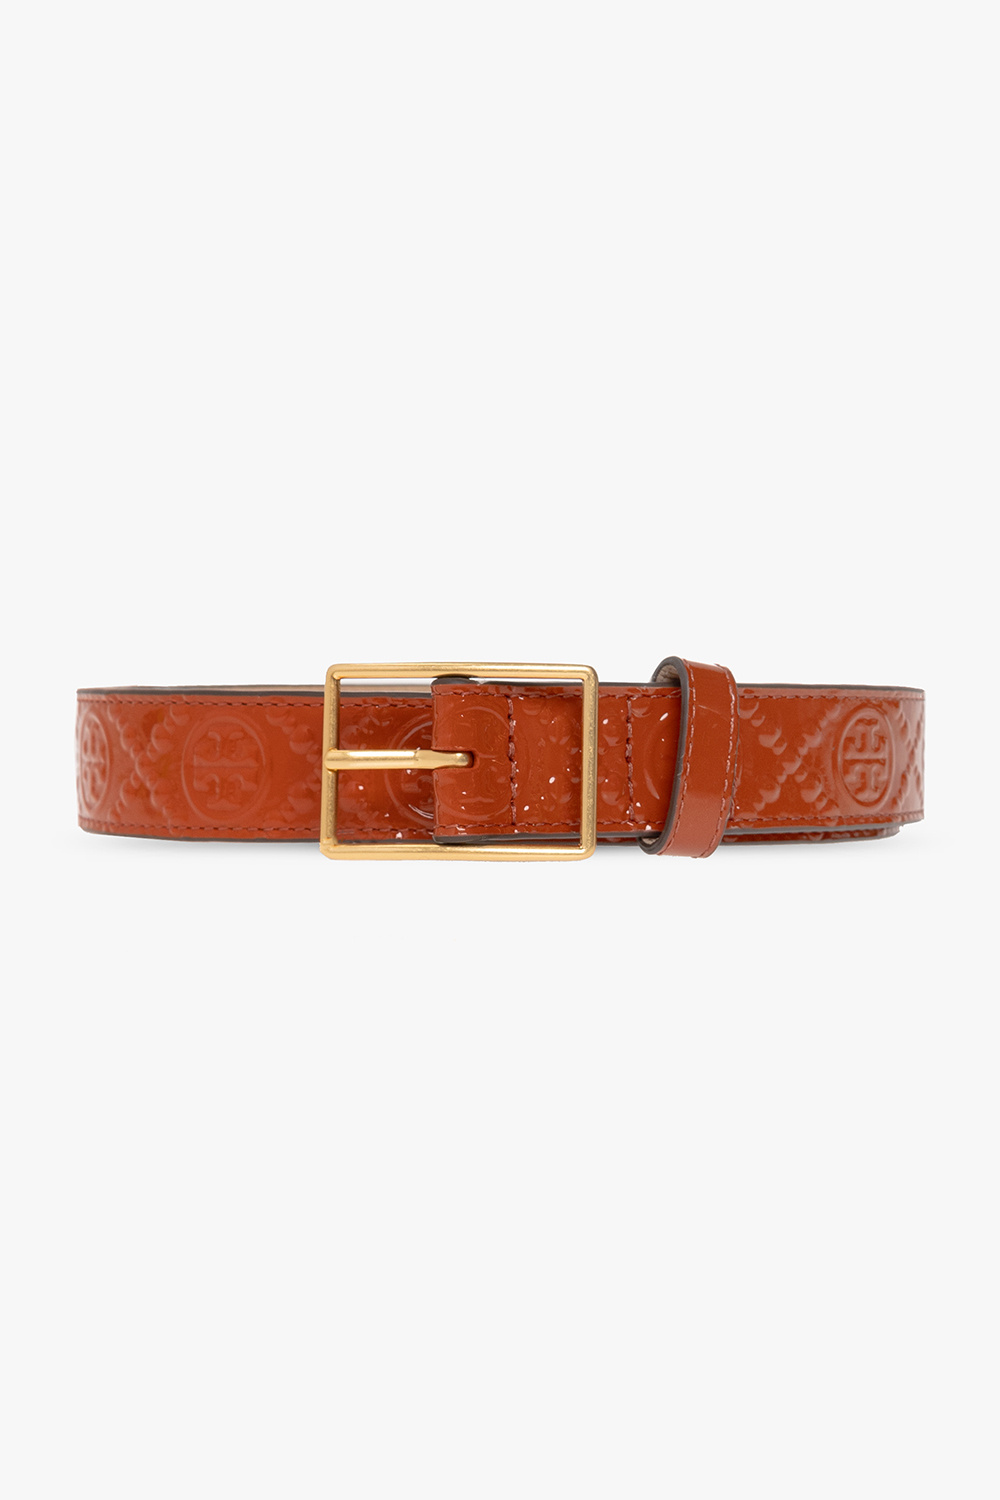 Tory Burch Leather belt